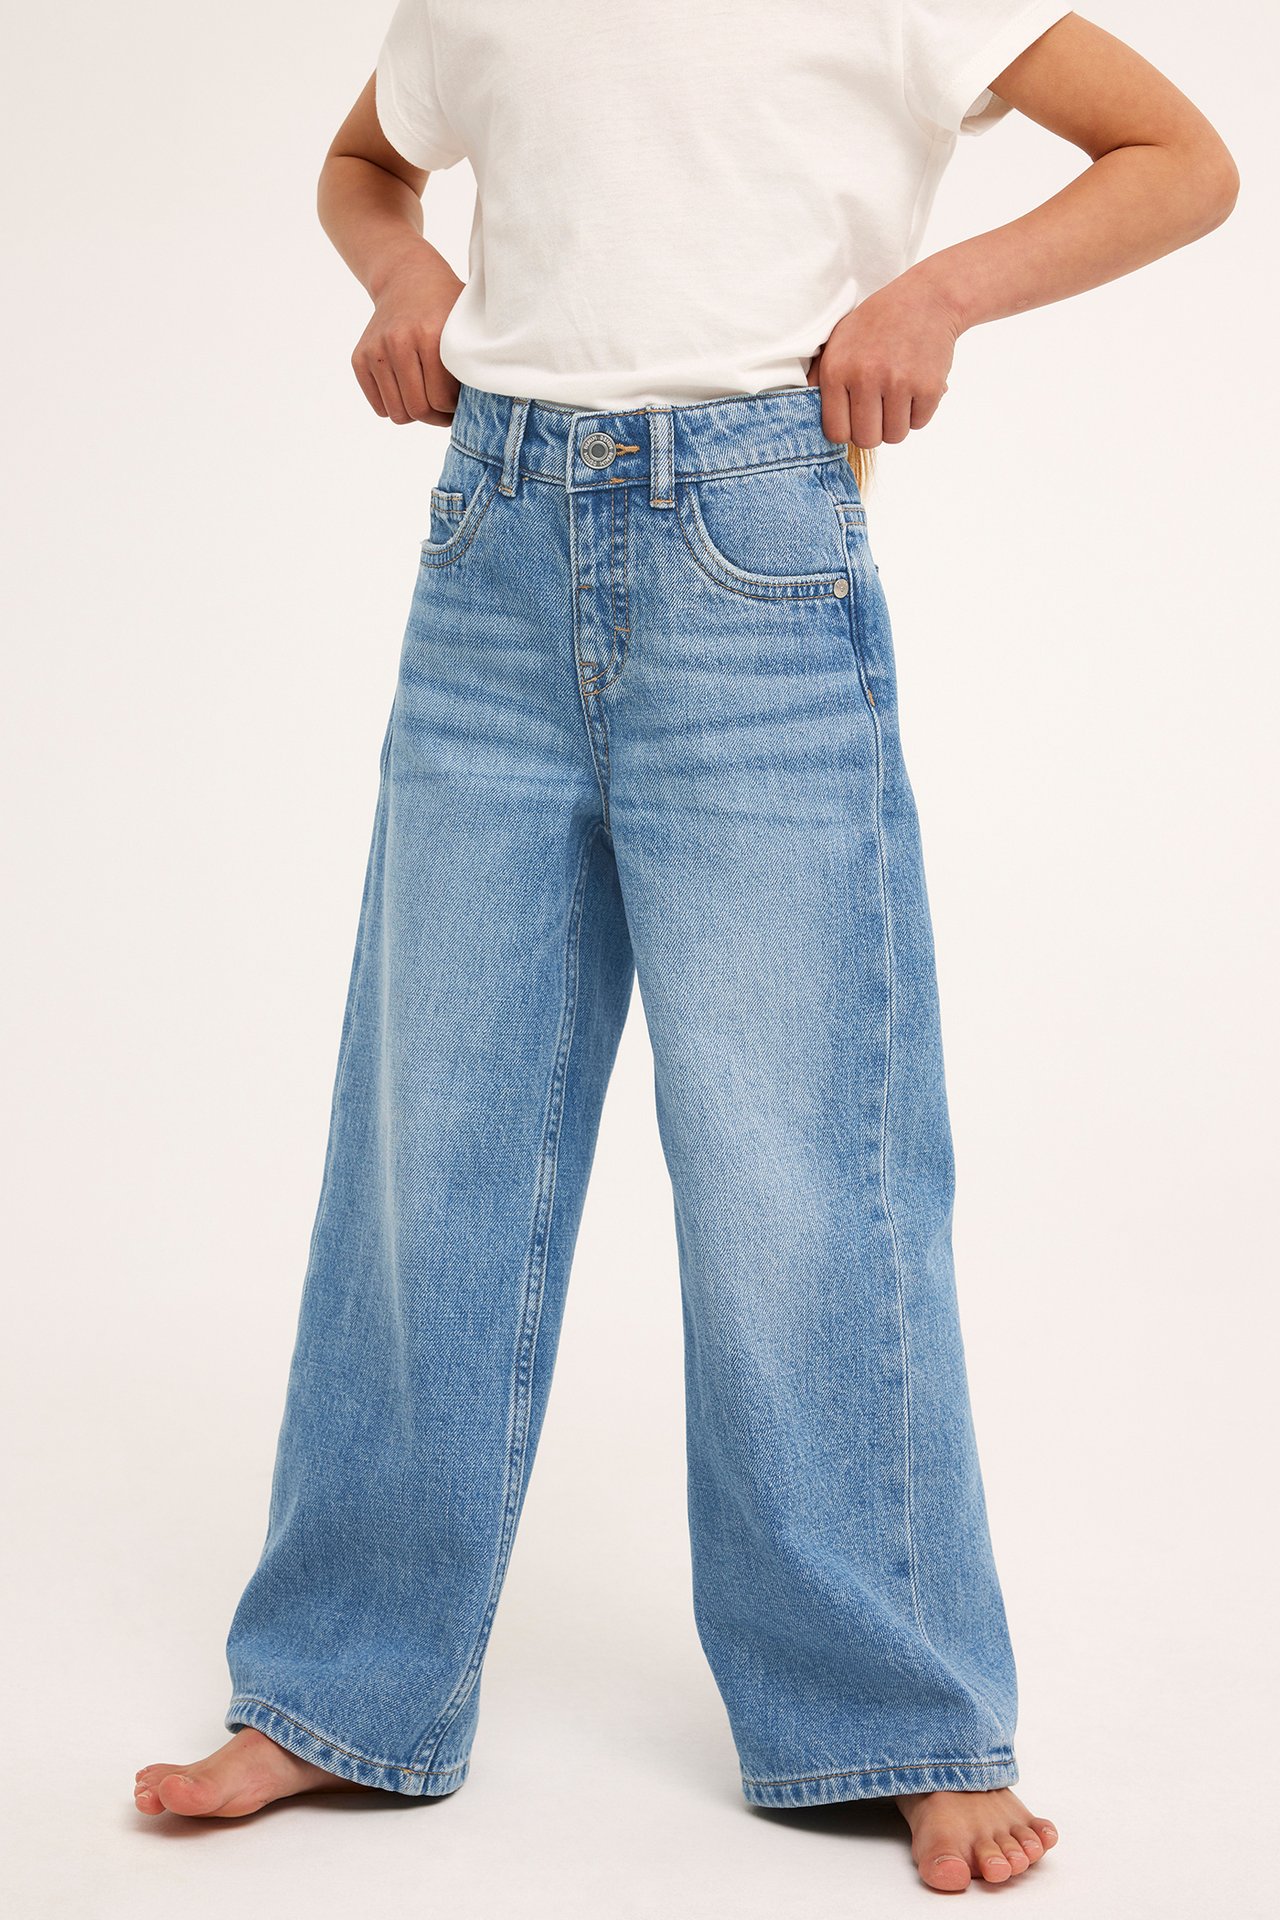 Vida jeans - Denim - 3